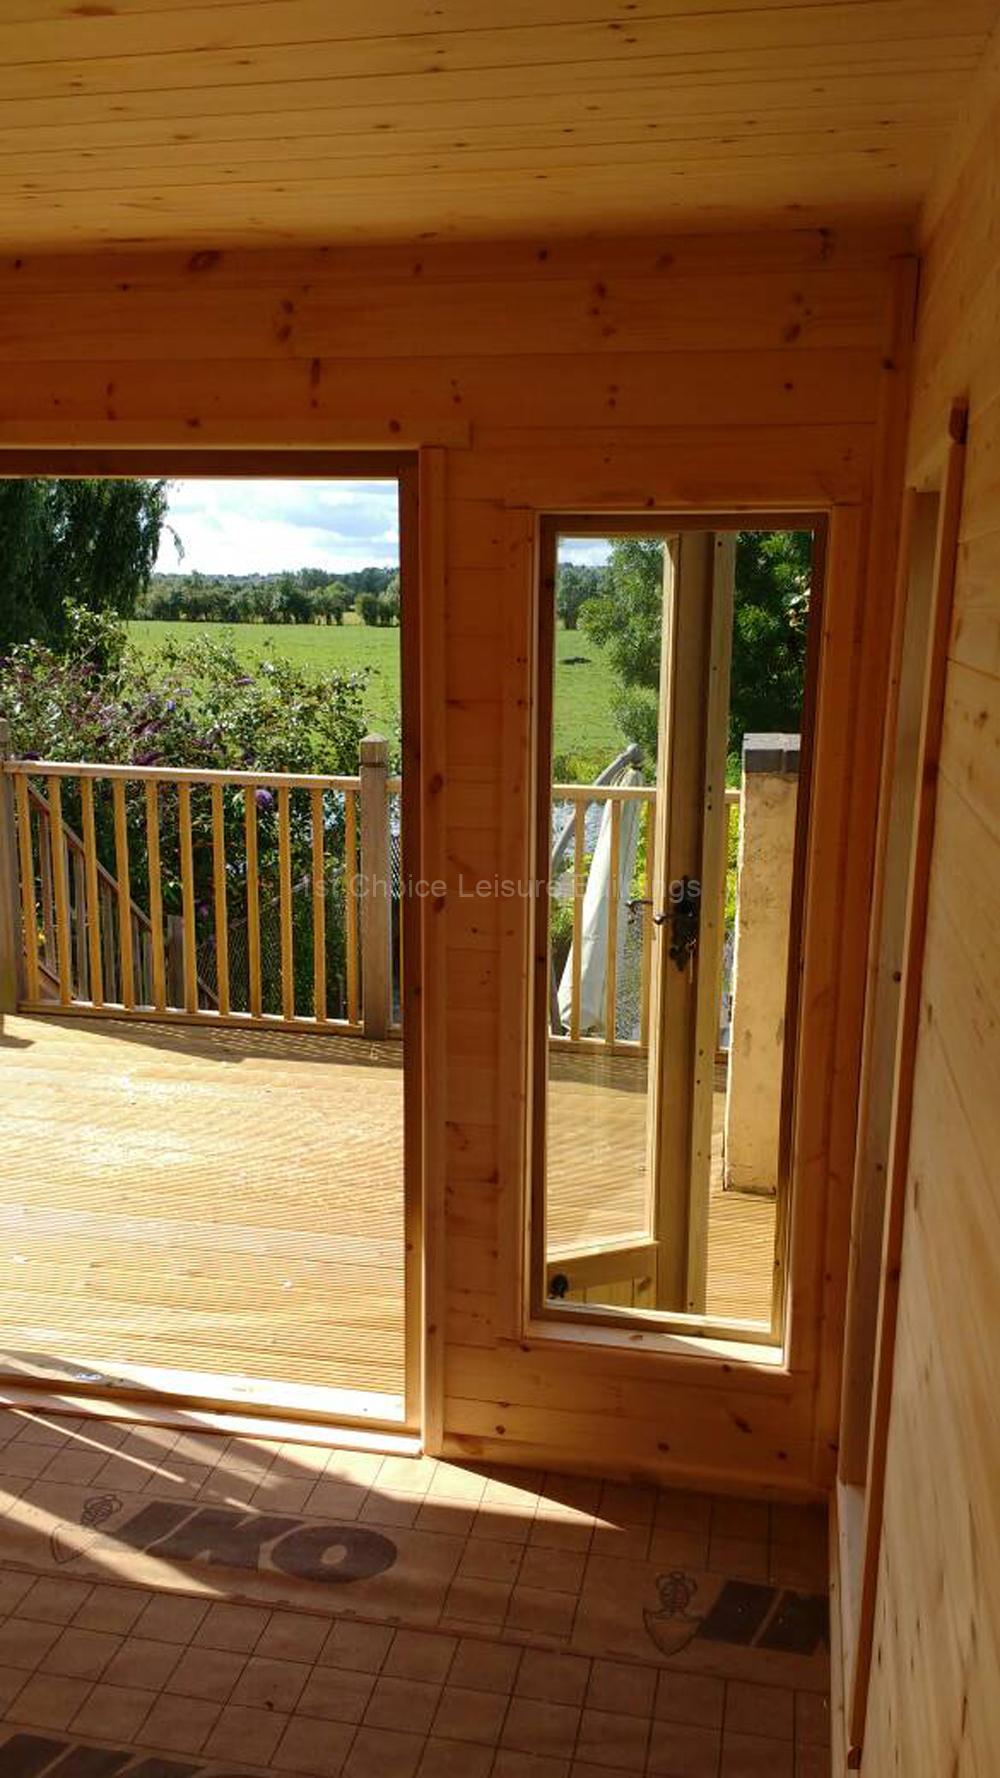 Showing Contemporary Windows for Summerhouse - Garden Workshop - Garden Room 2